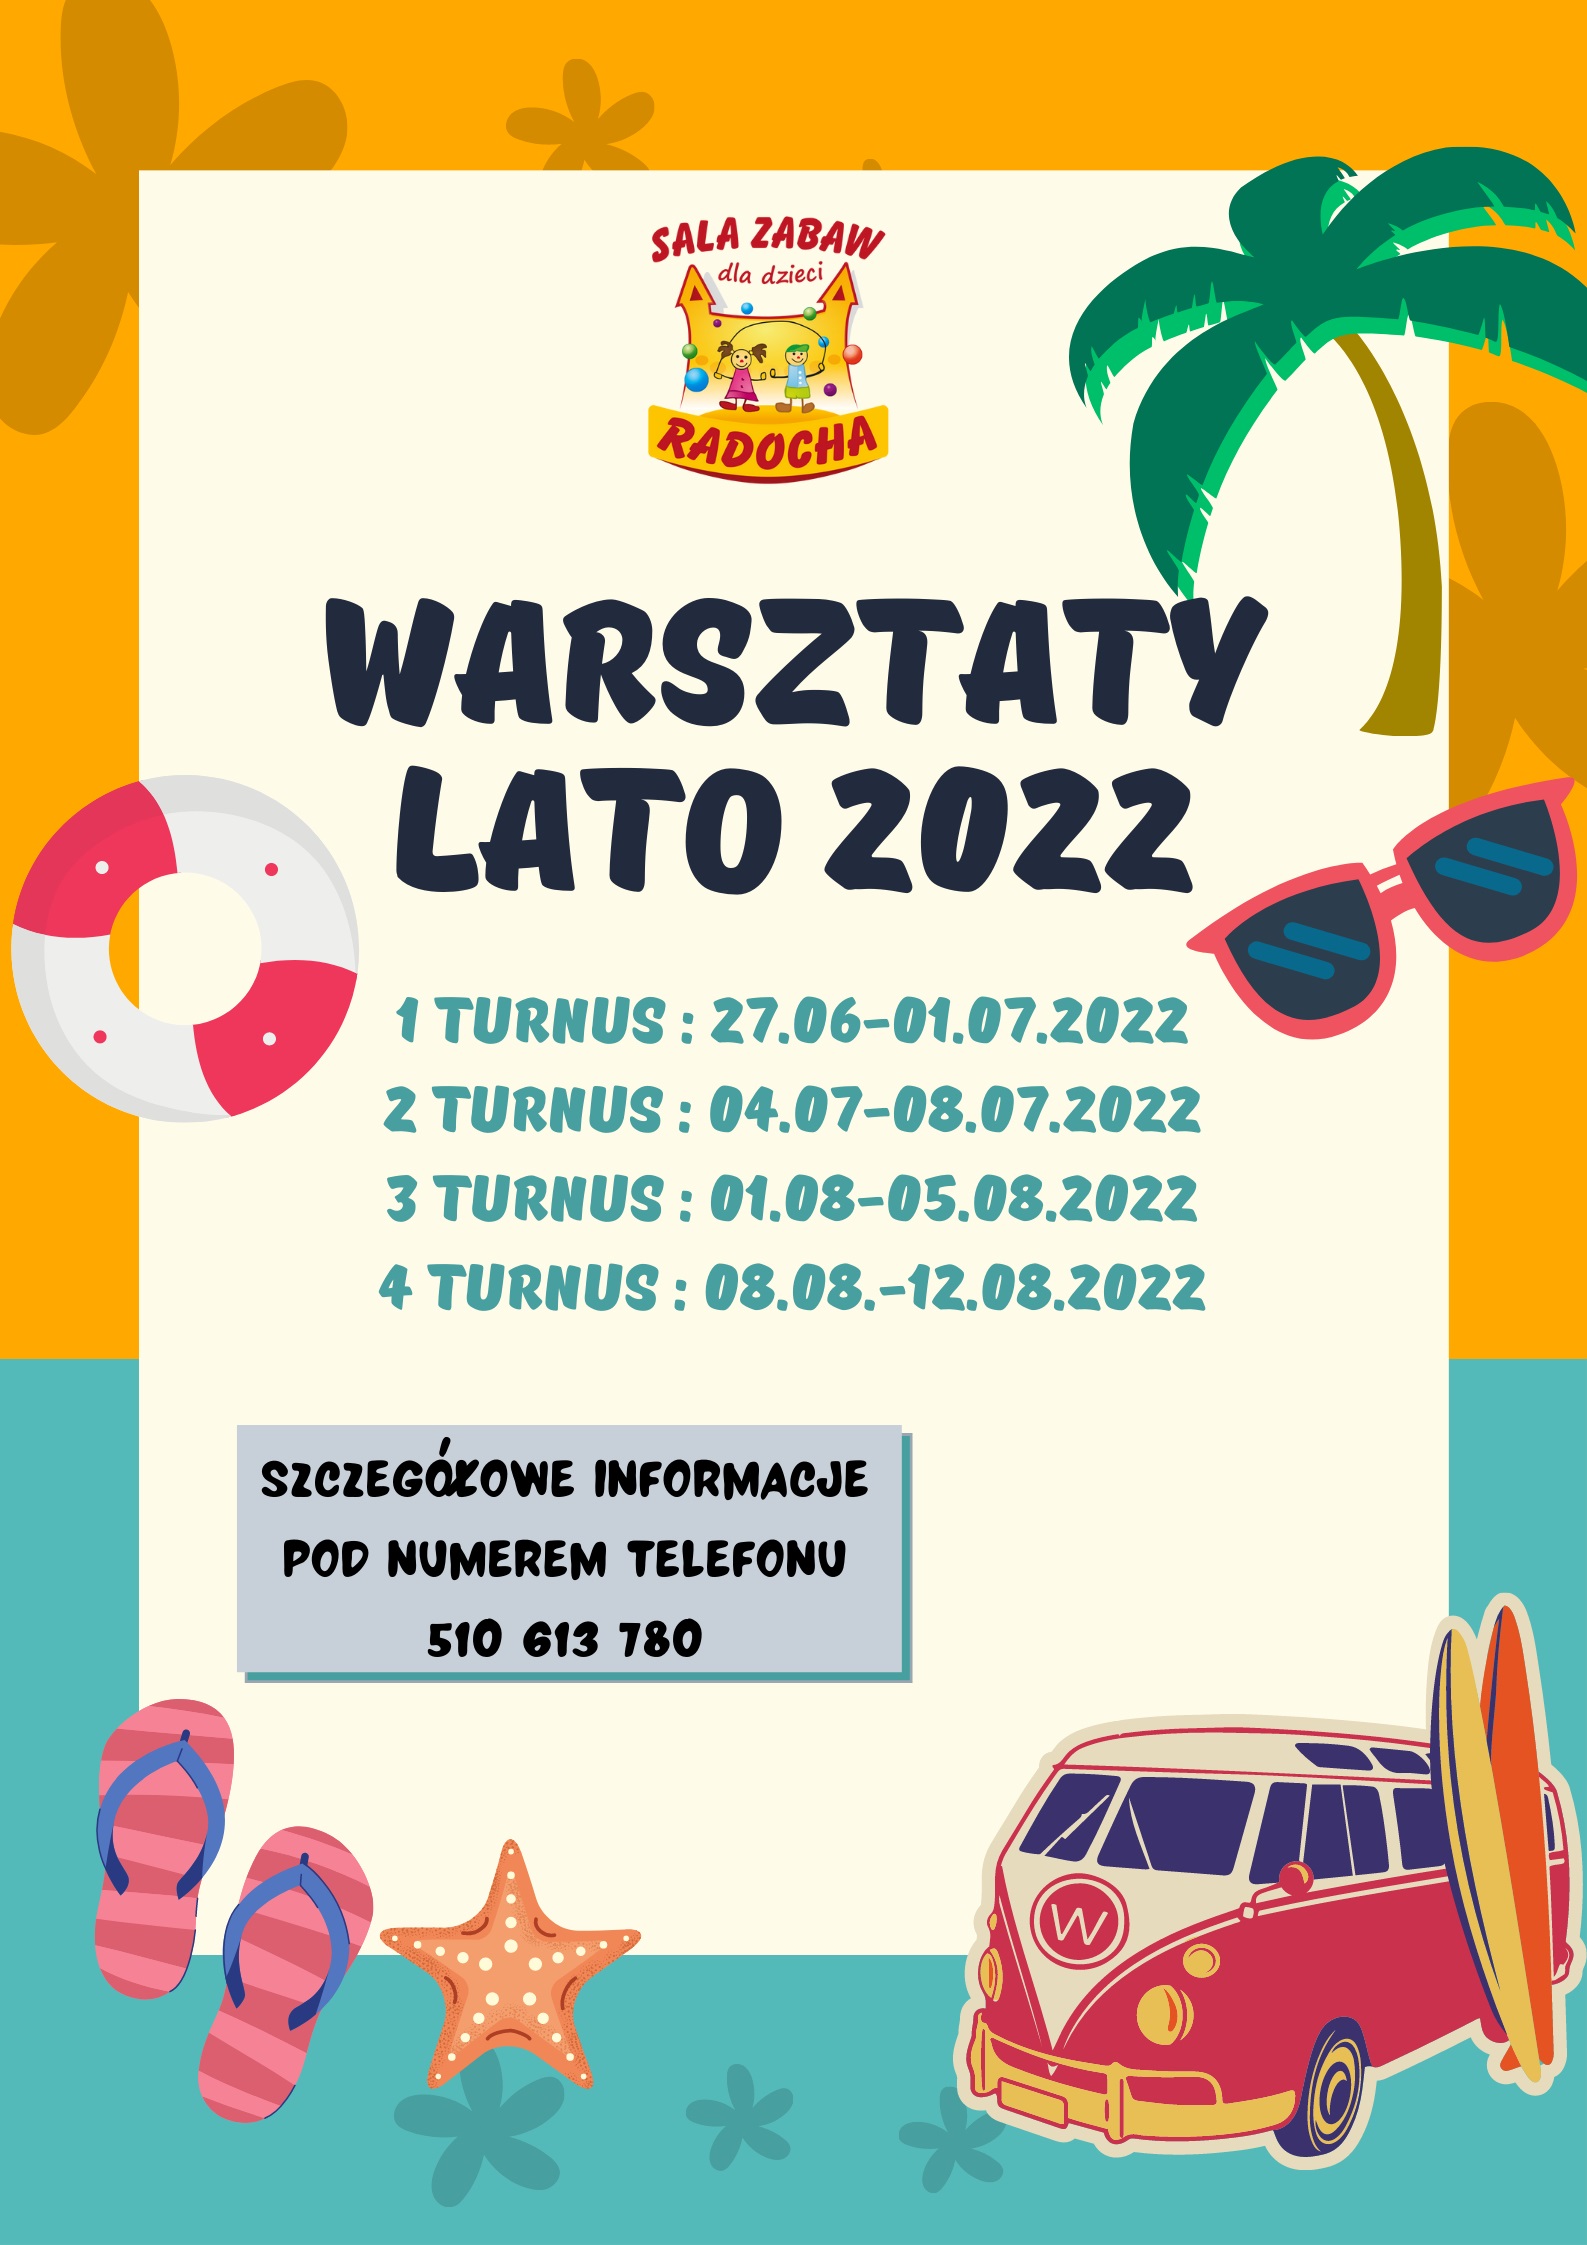 WARSZTATY LATO 2022